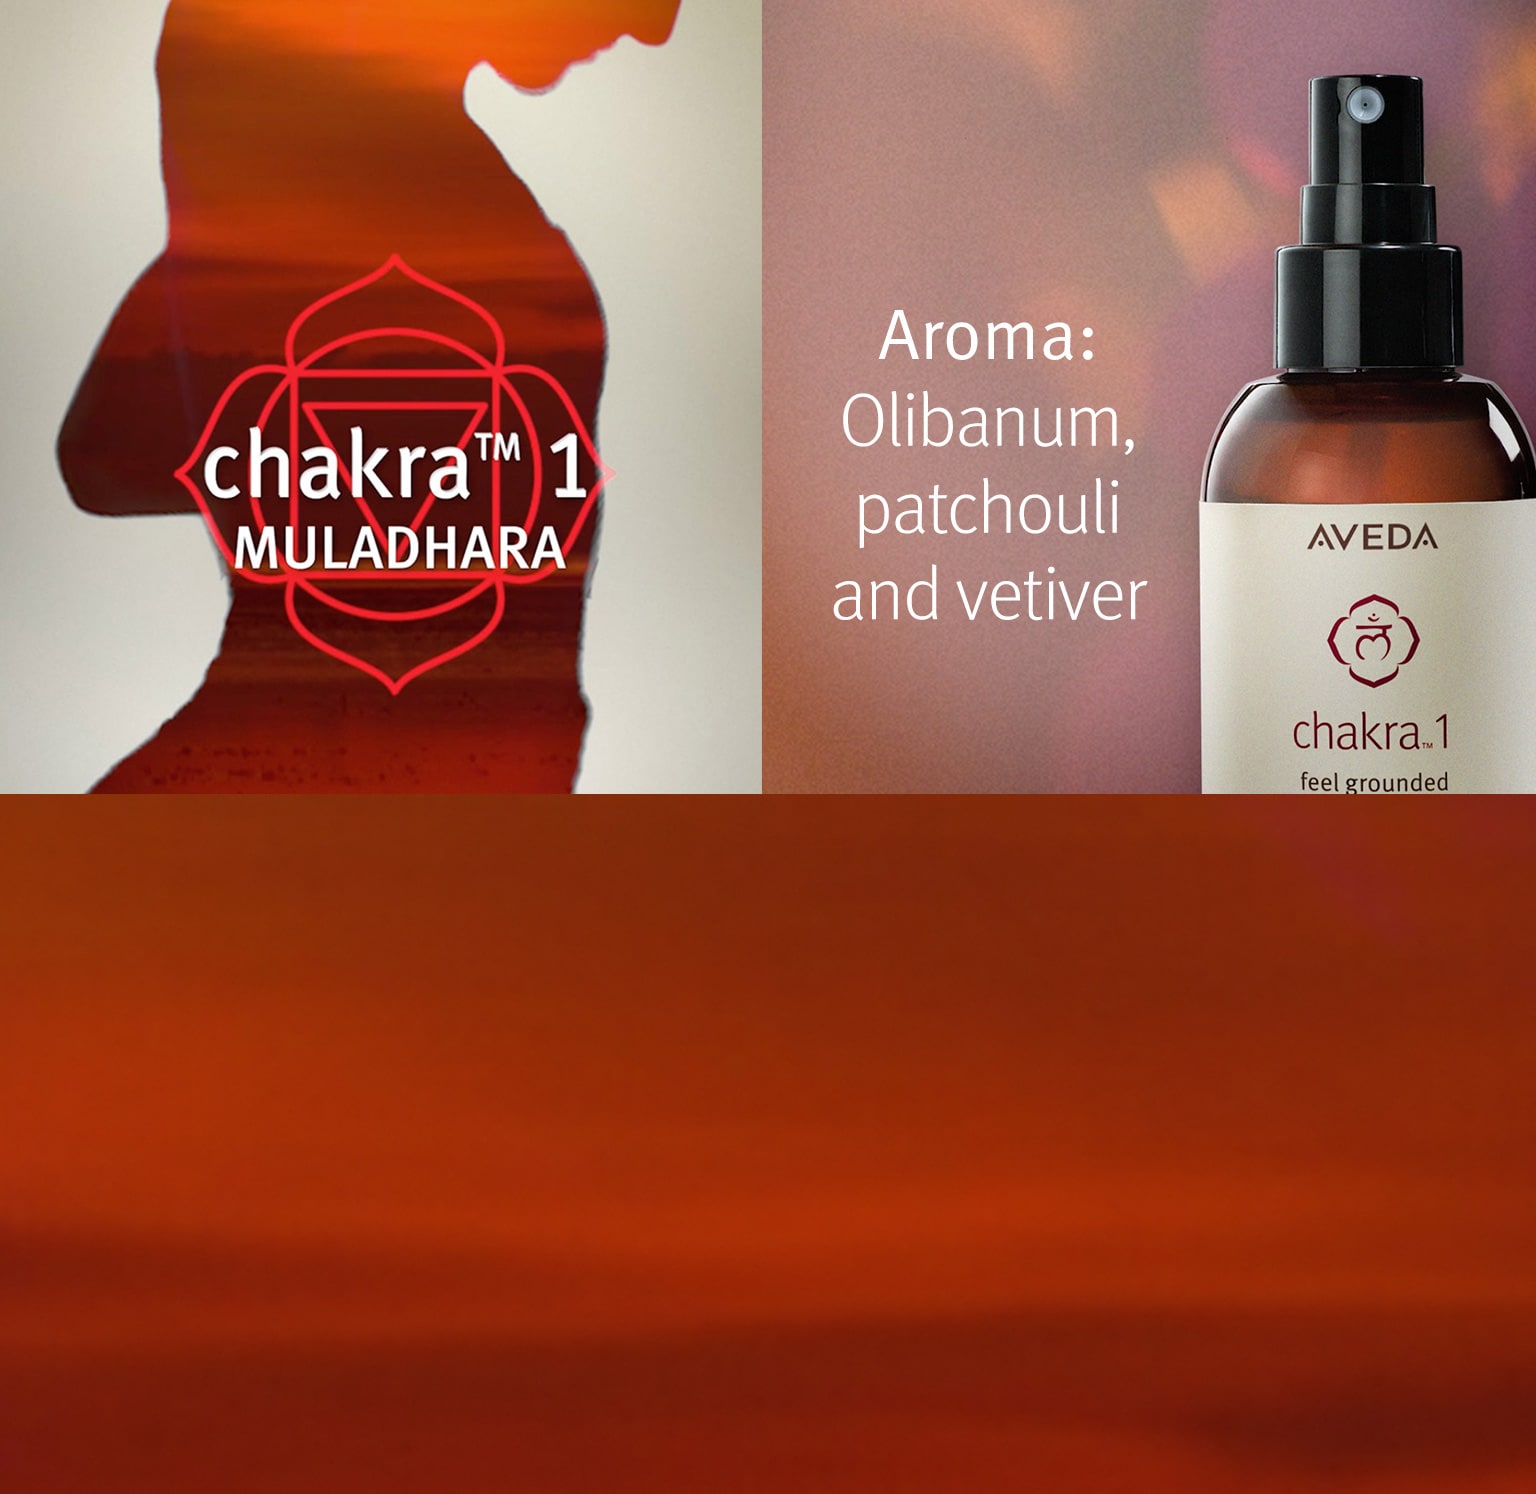 Chakra 1 aroma includes olibanum, patchouli & vetiver aromas.